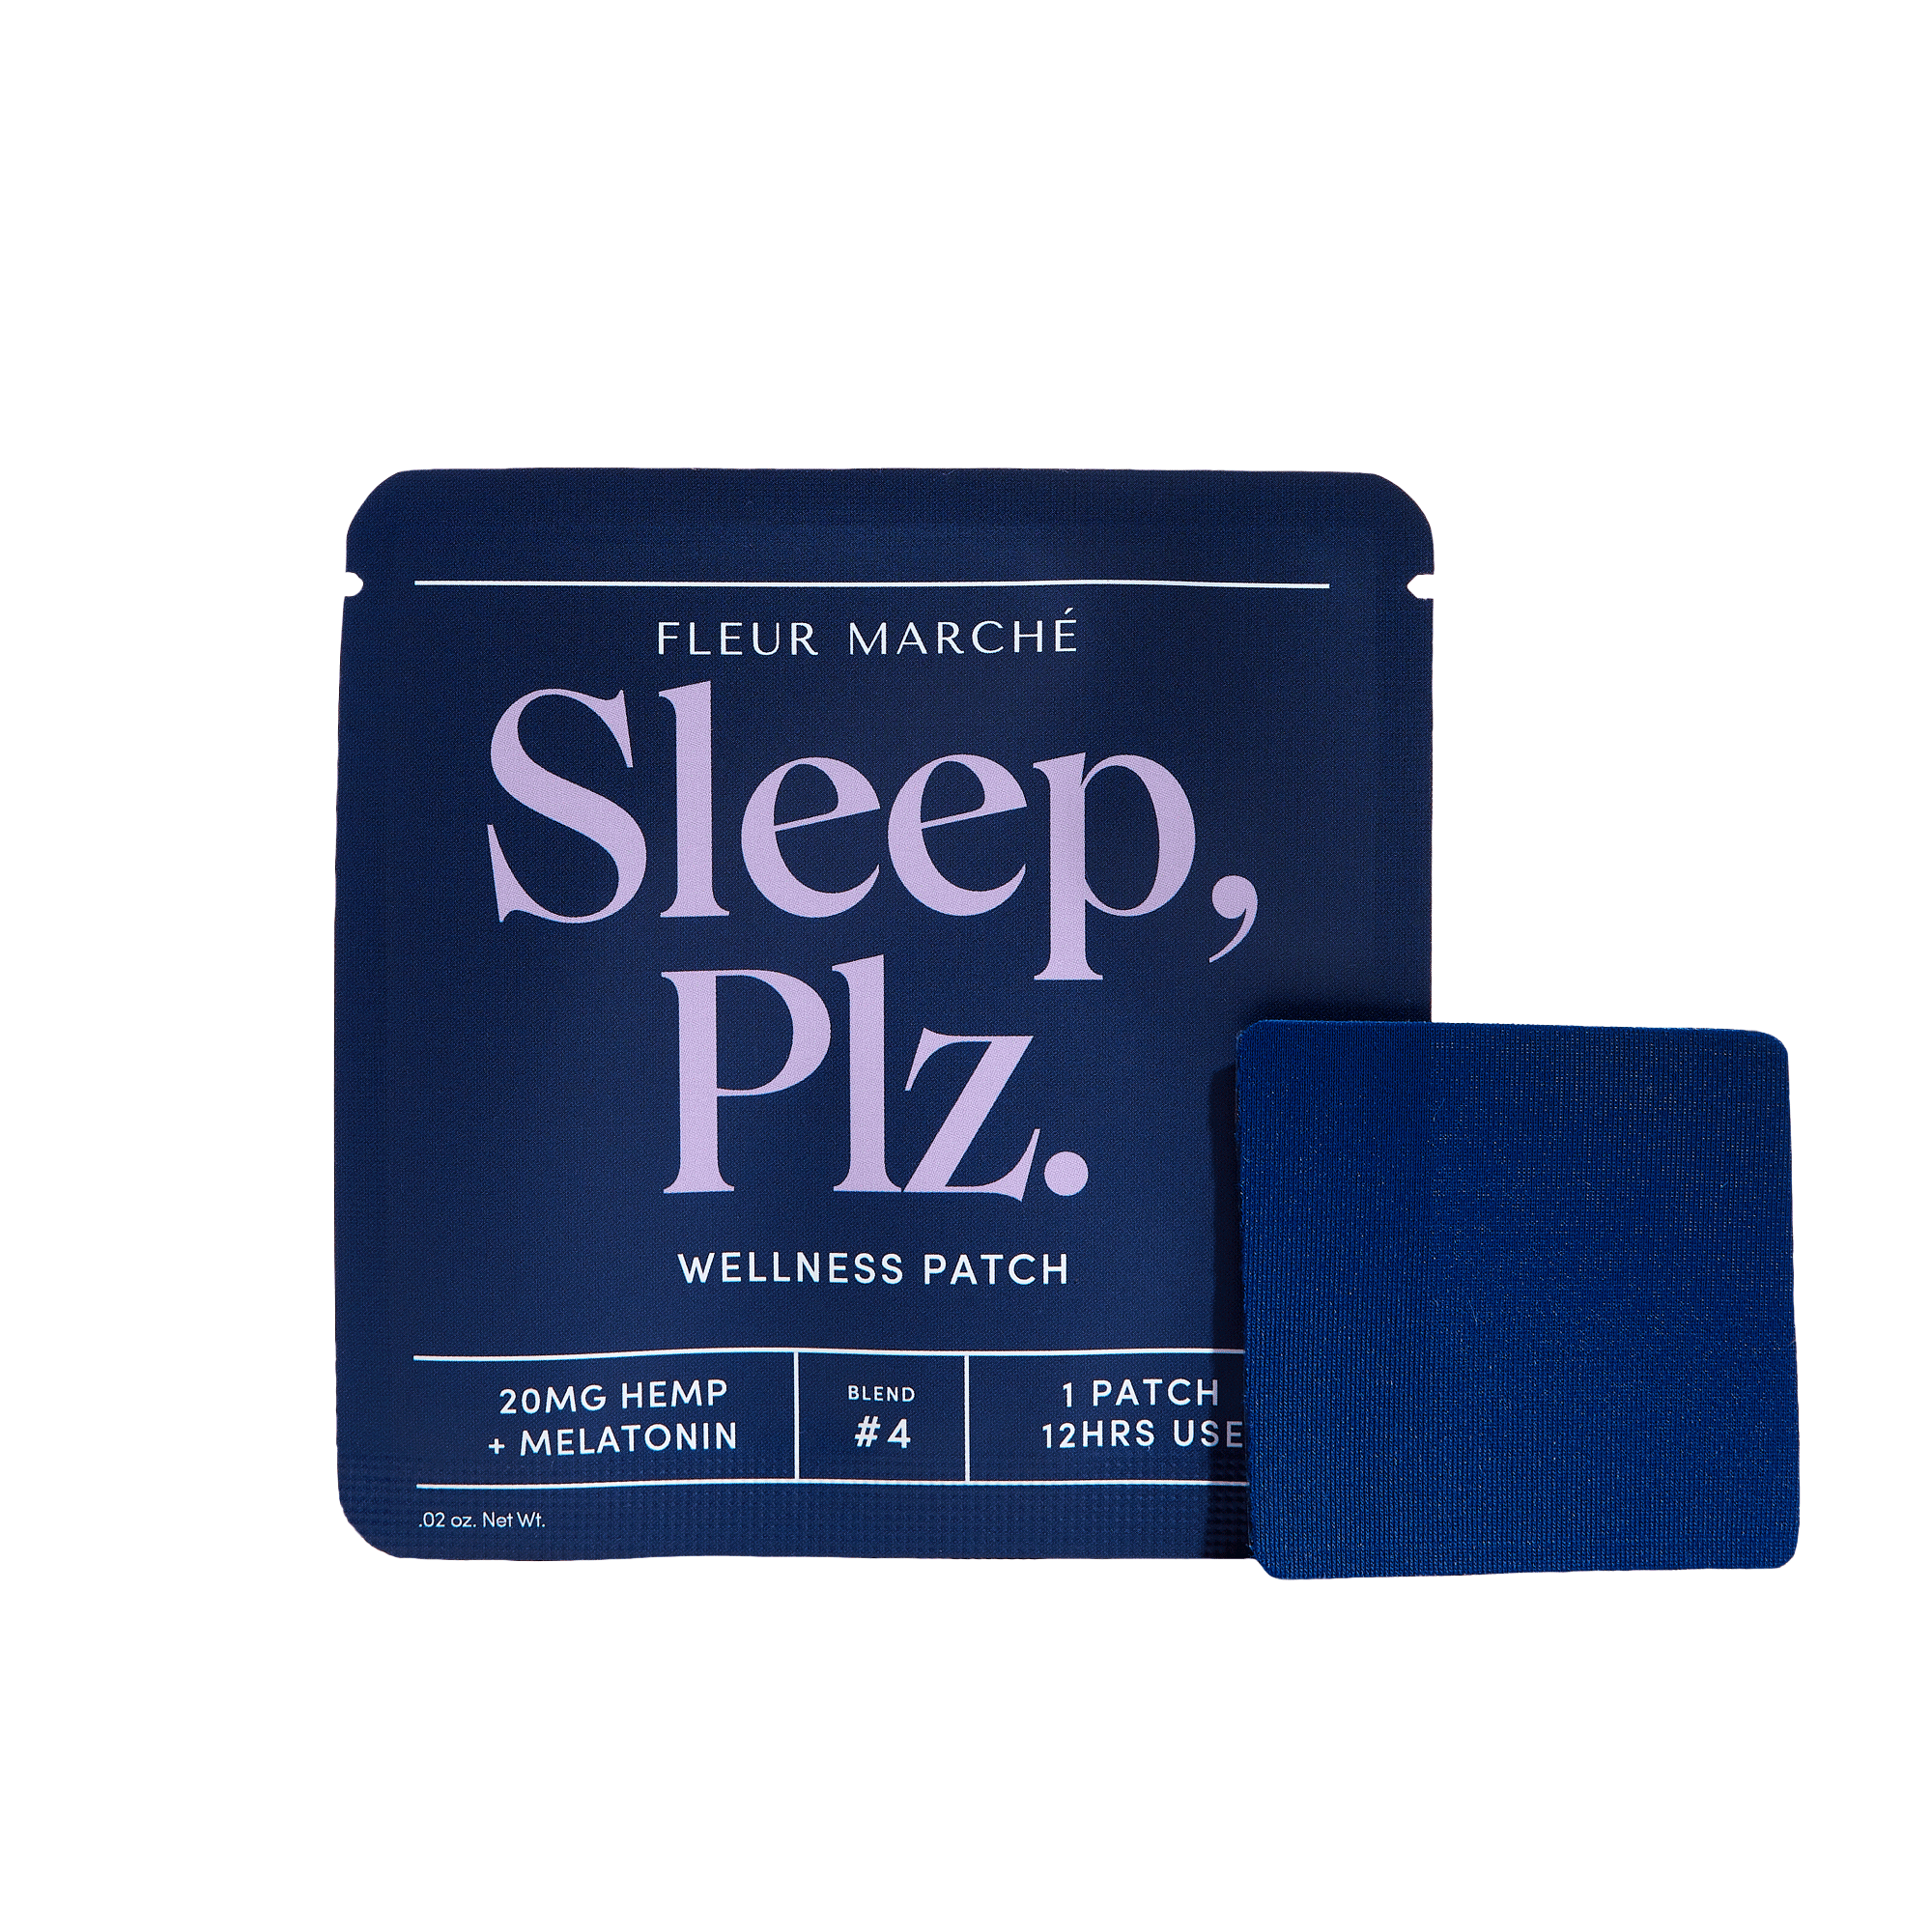 Sleep Plz. patch with sleeve